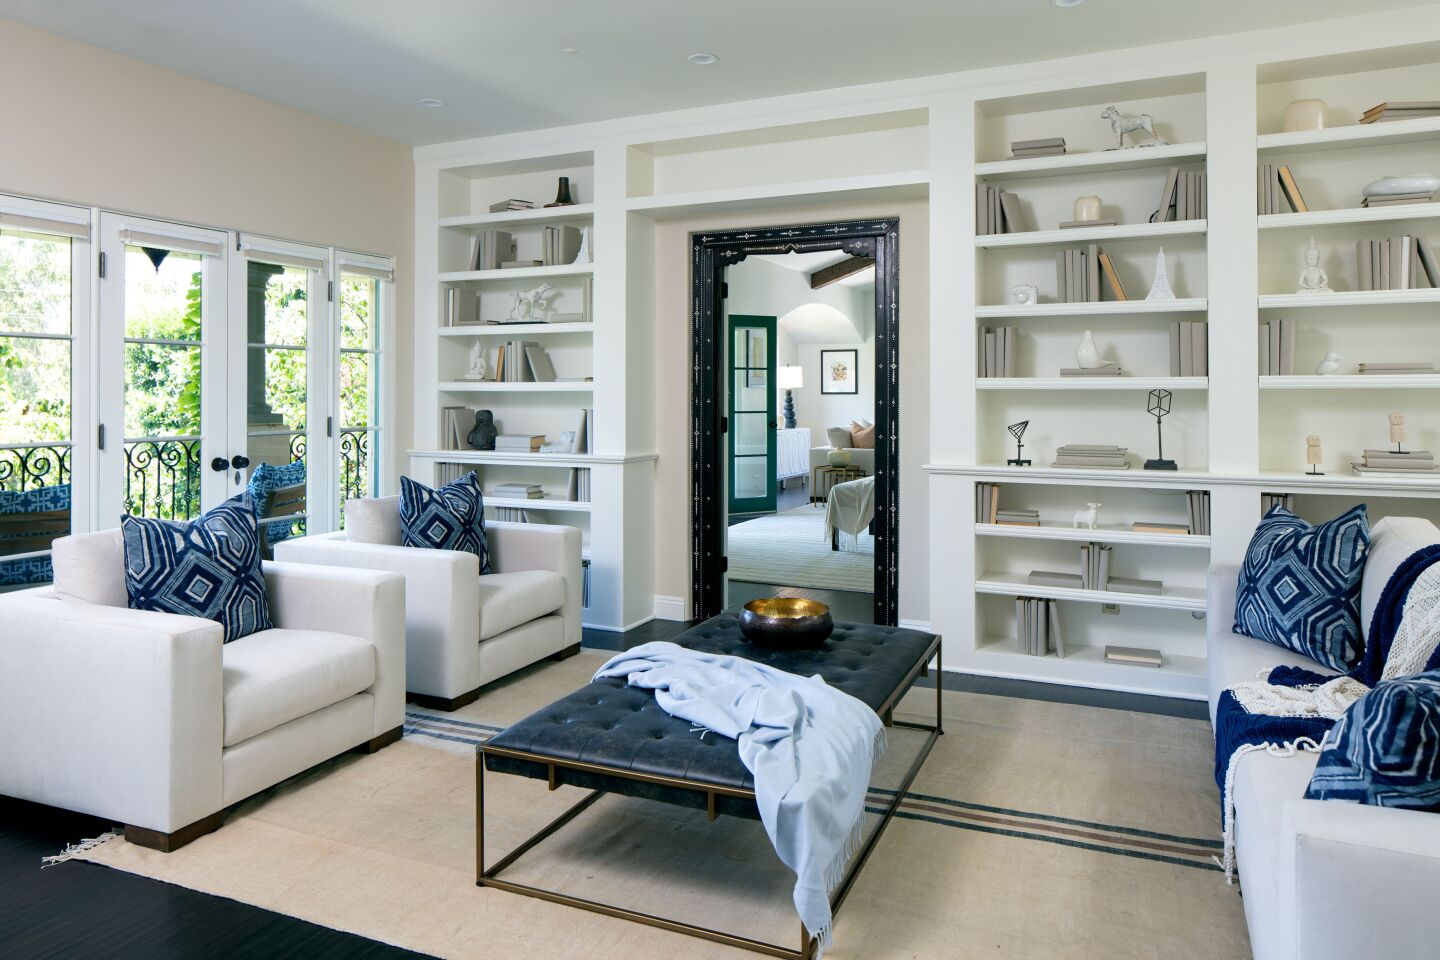 Geena Davis' Pacific Palisades house: sitting room